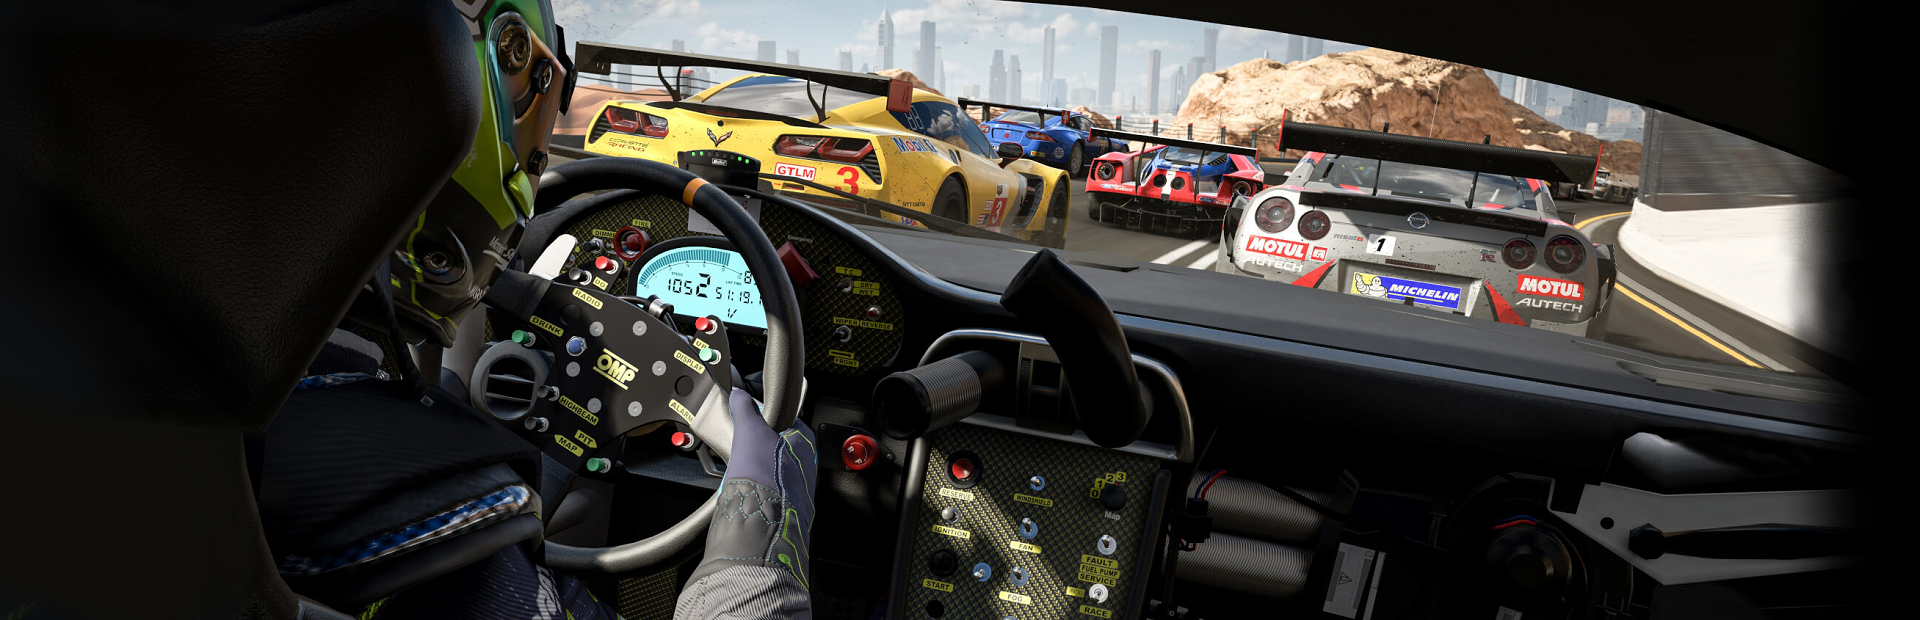 Forza Motorsport - SteamGridDB